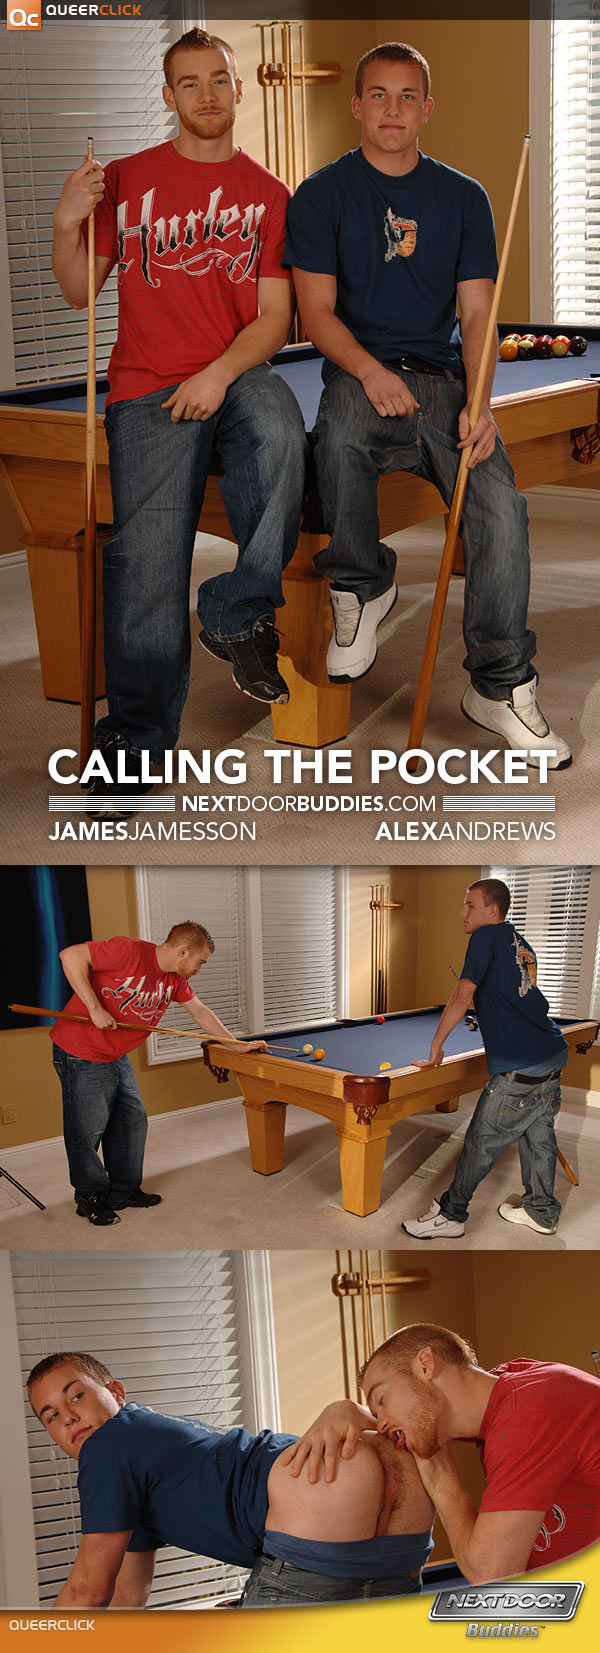 Next Door Buddies: James Jamesson and Alex Andrews